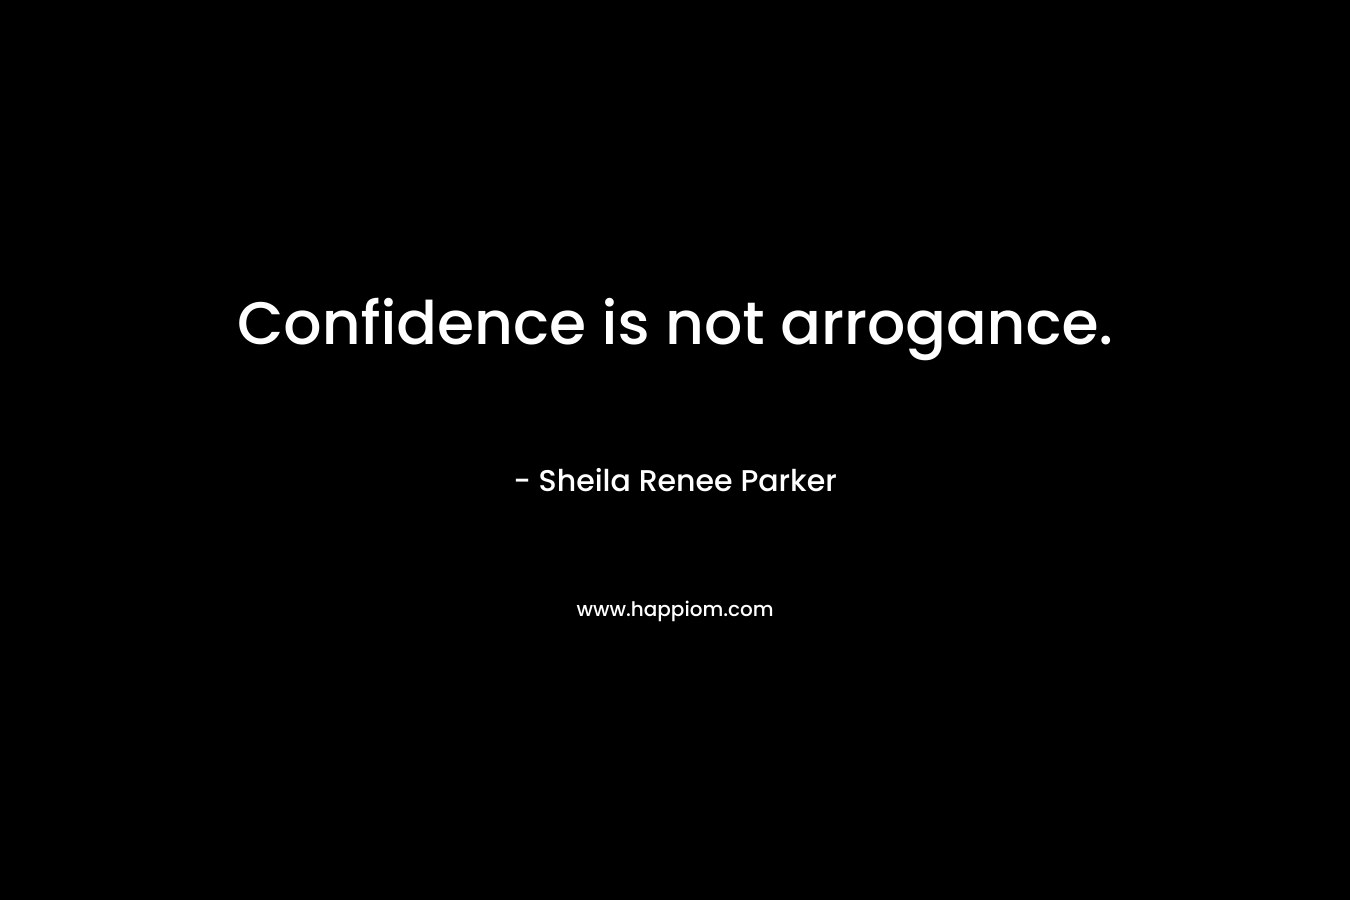 Confidence is not arrogance.